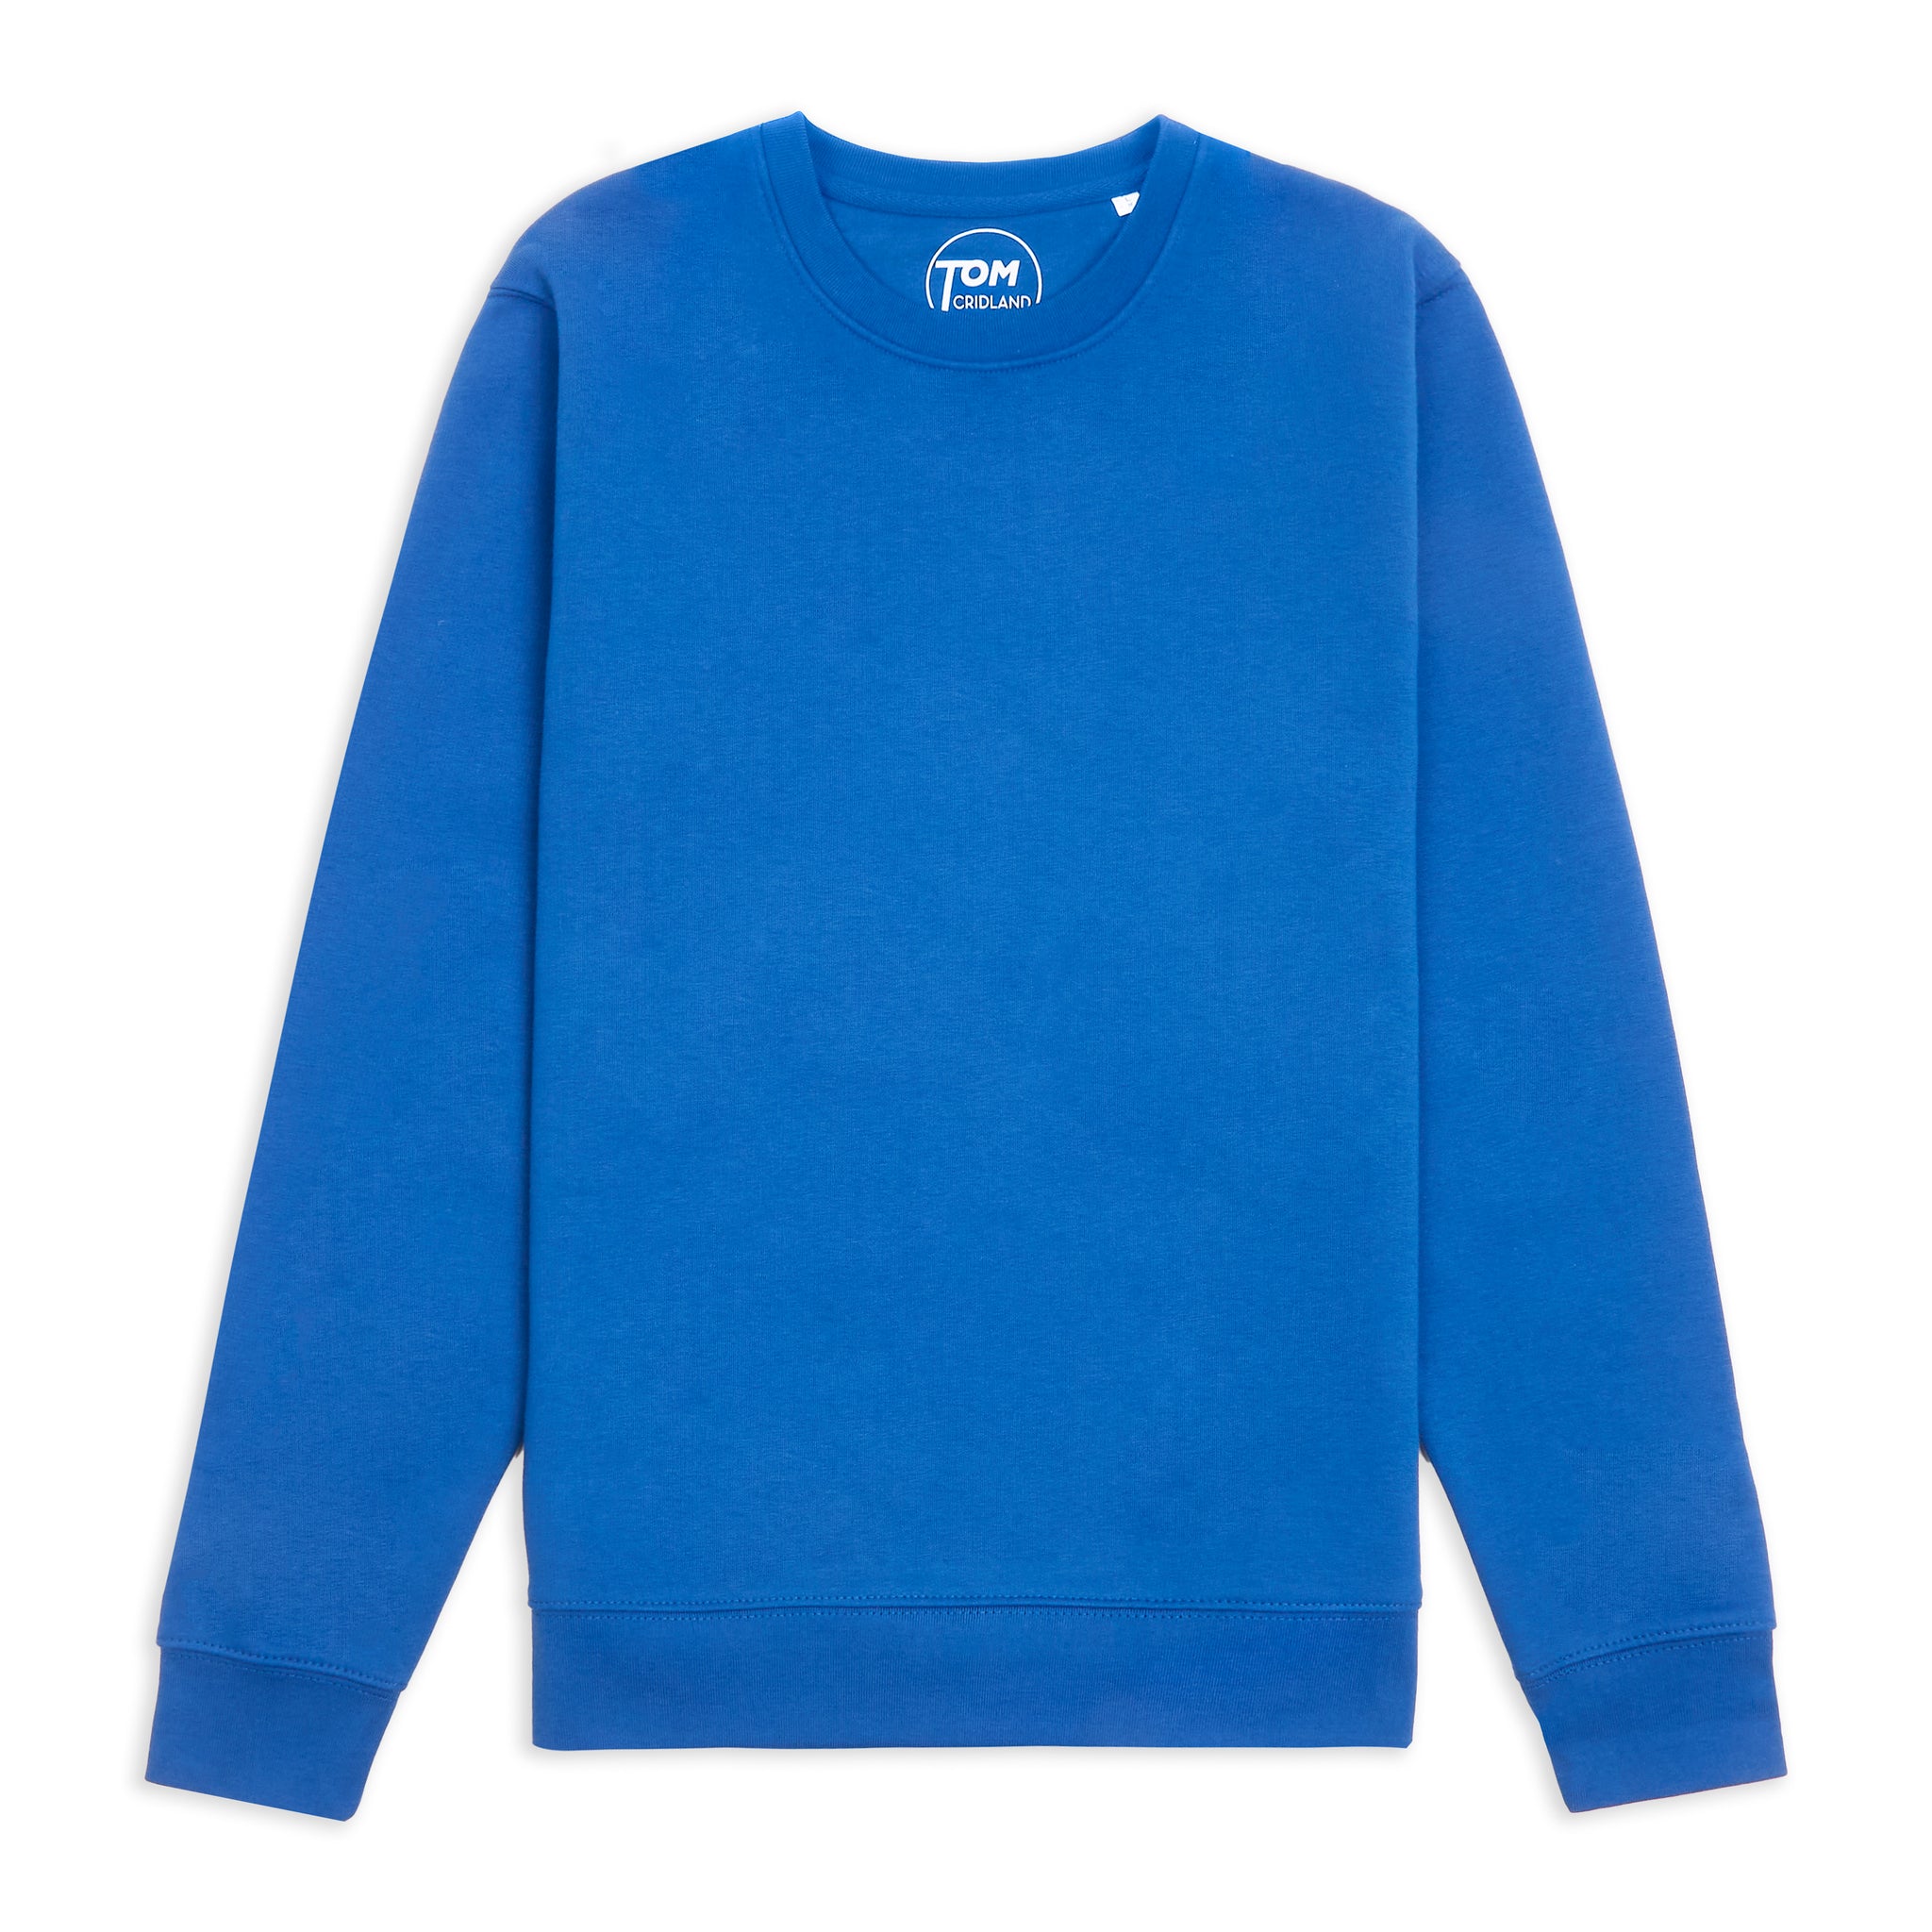 Royal Blue 30 Year Sweatshirt | Sustainable fashion by Tom Cridland